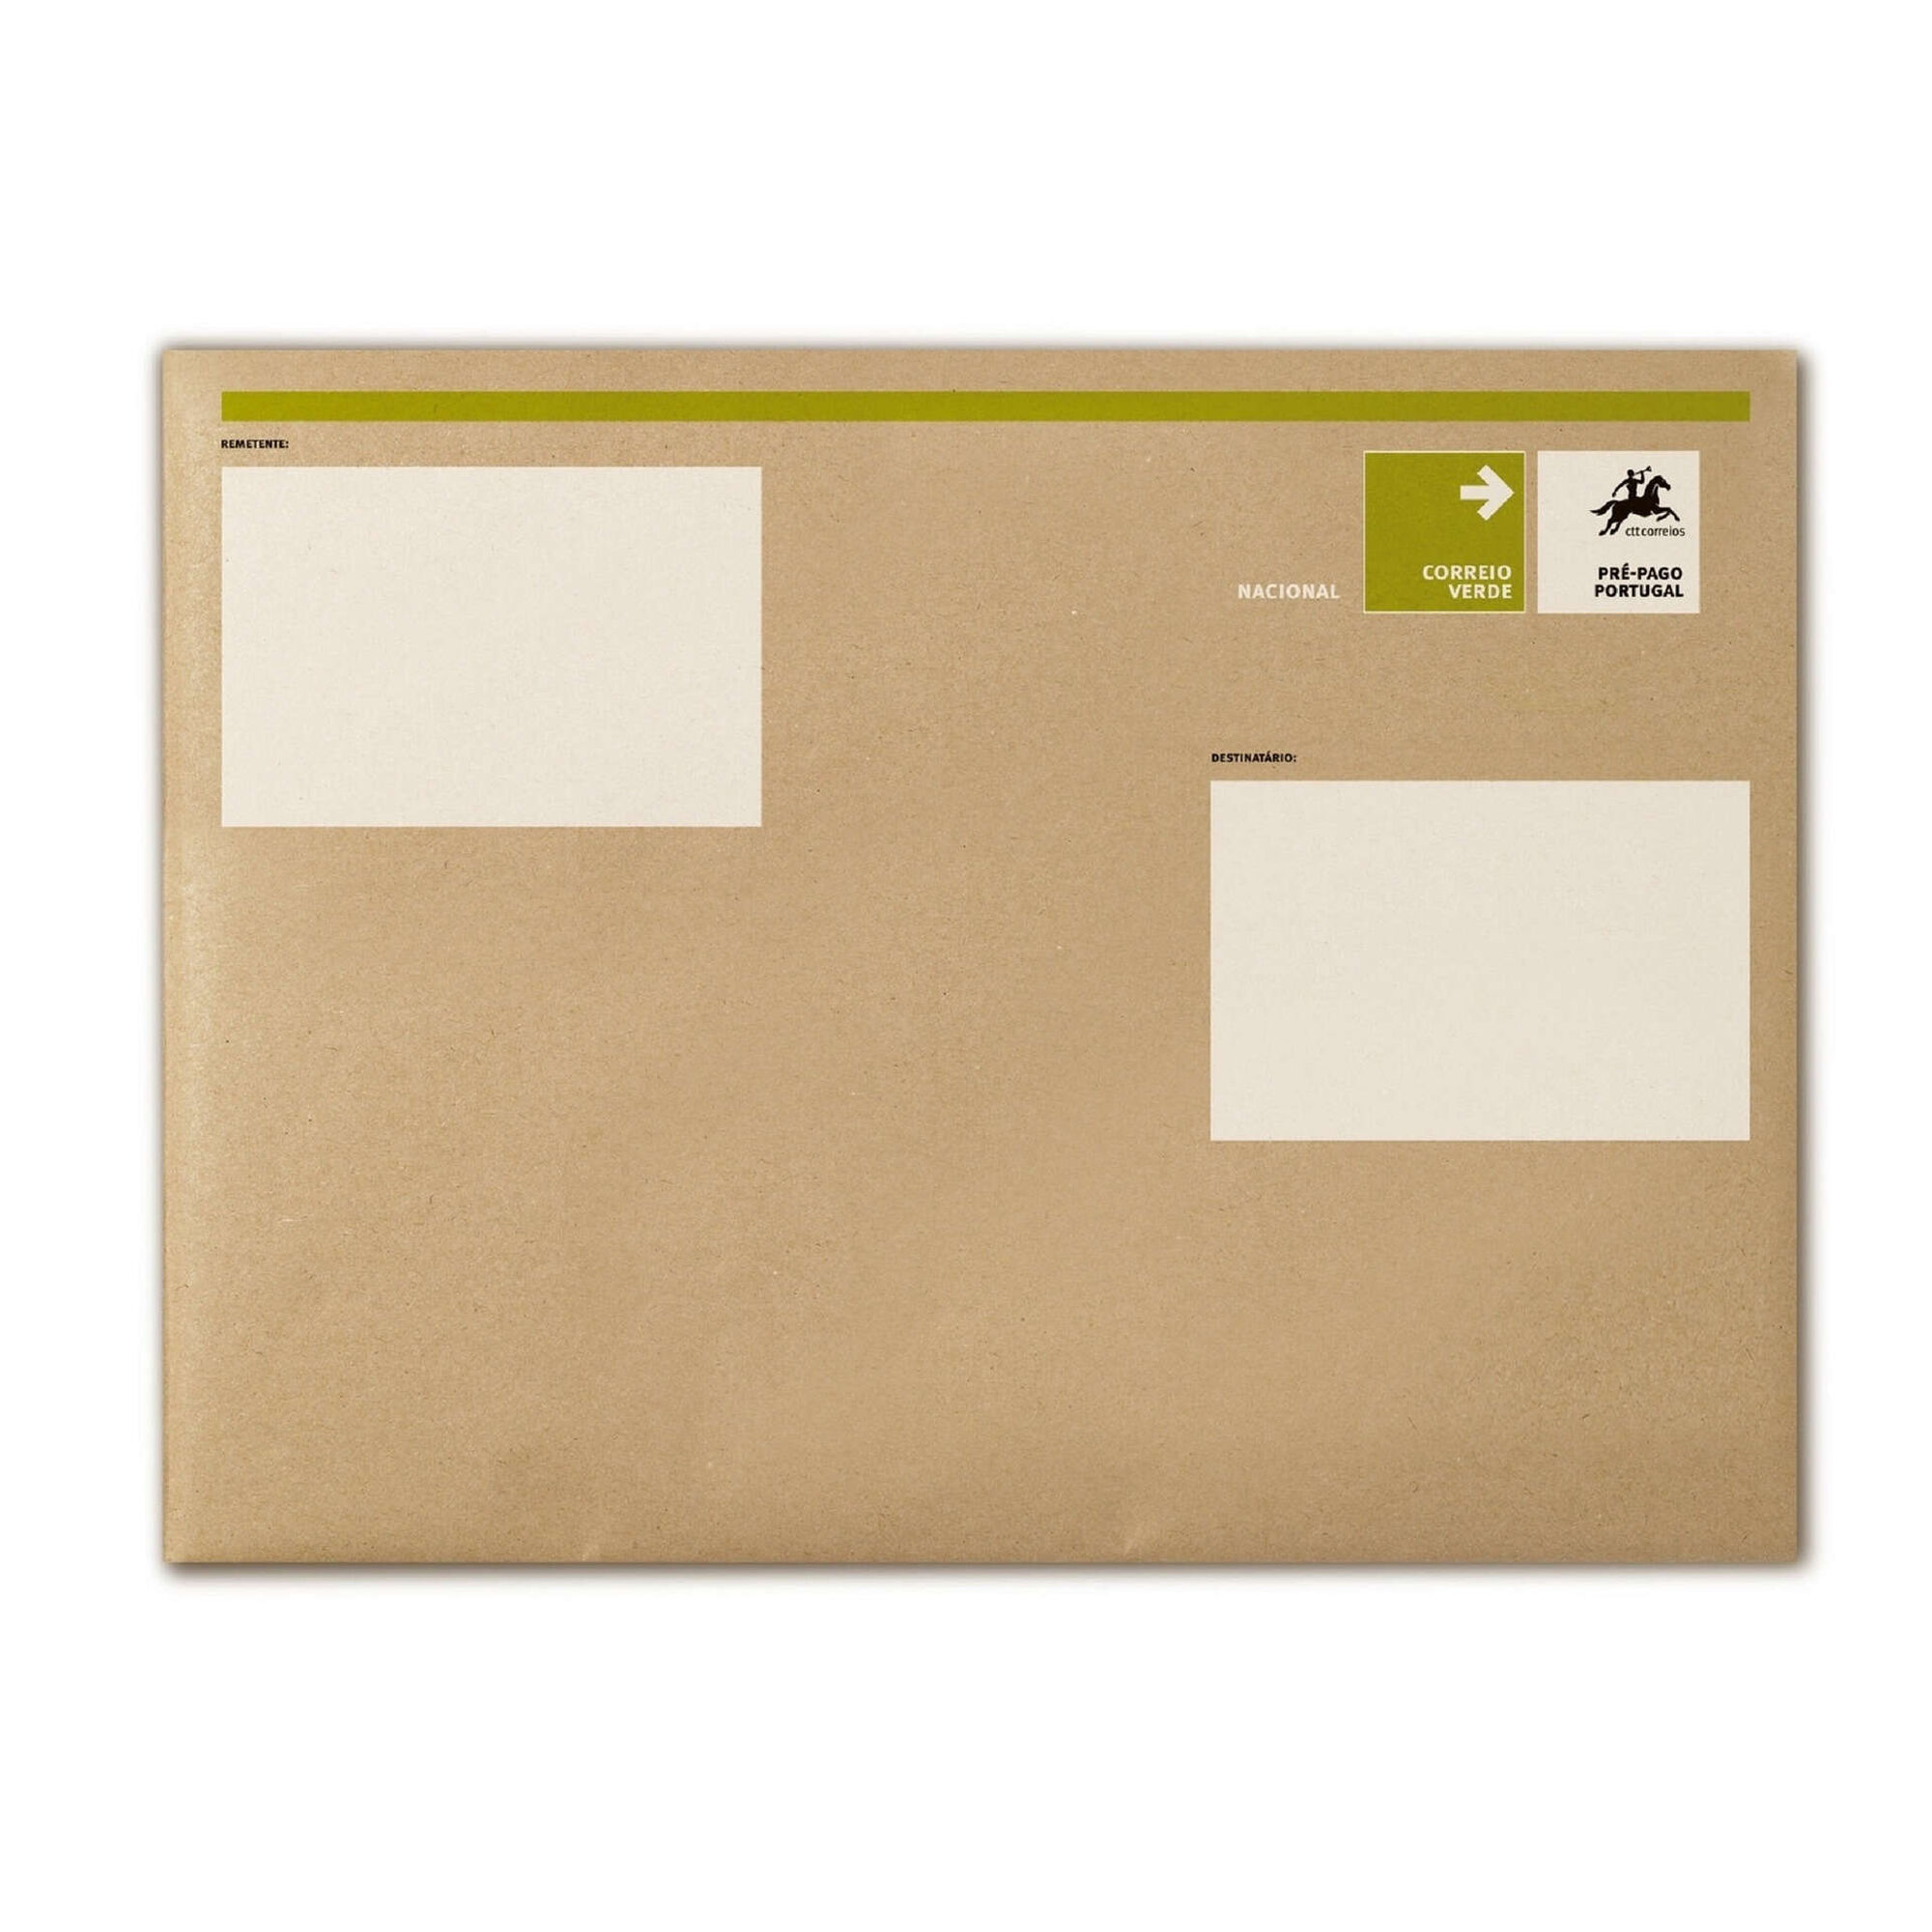 Envelope Almofadado Correio Verde Nacional M 265x175mm